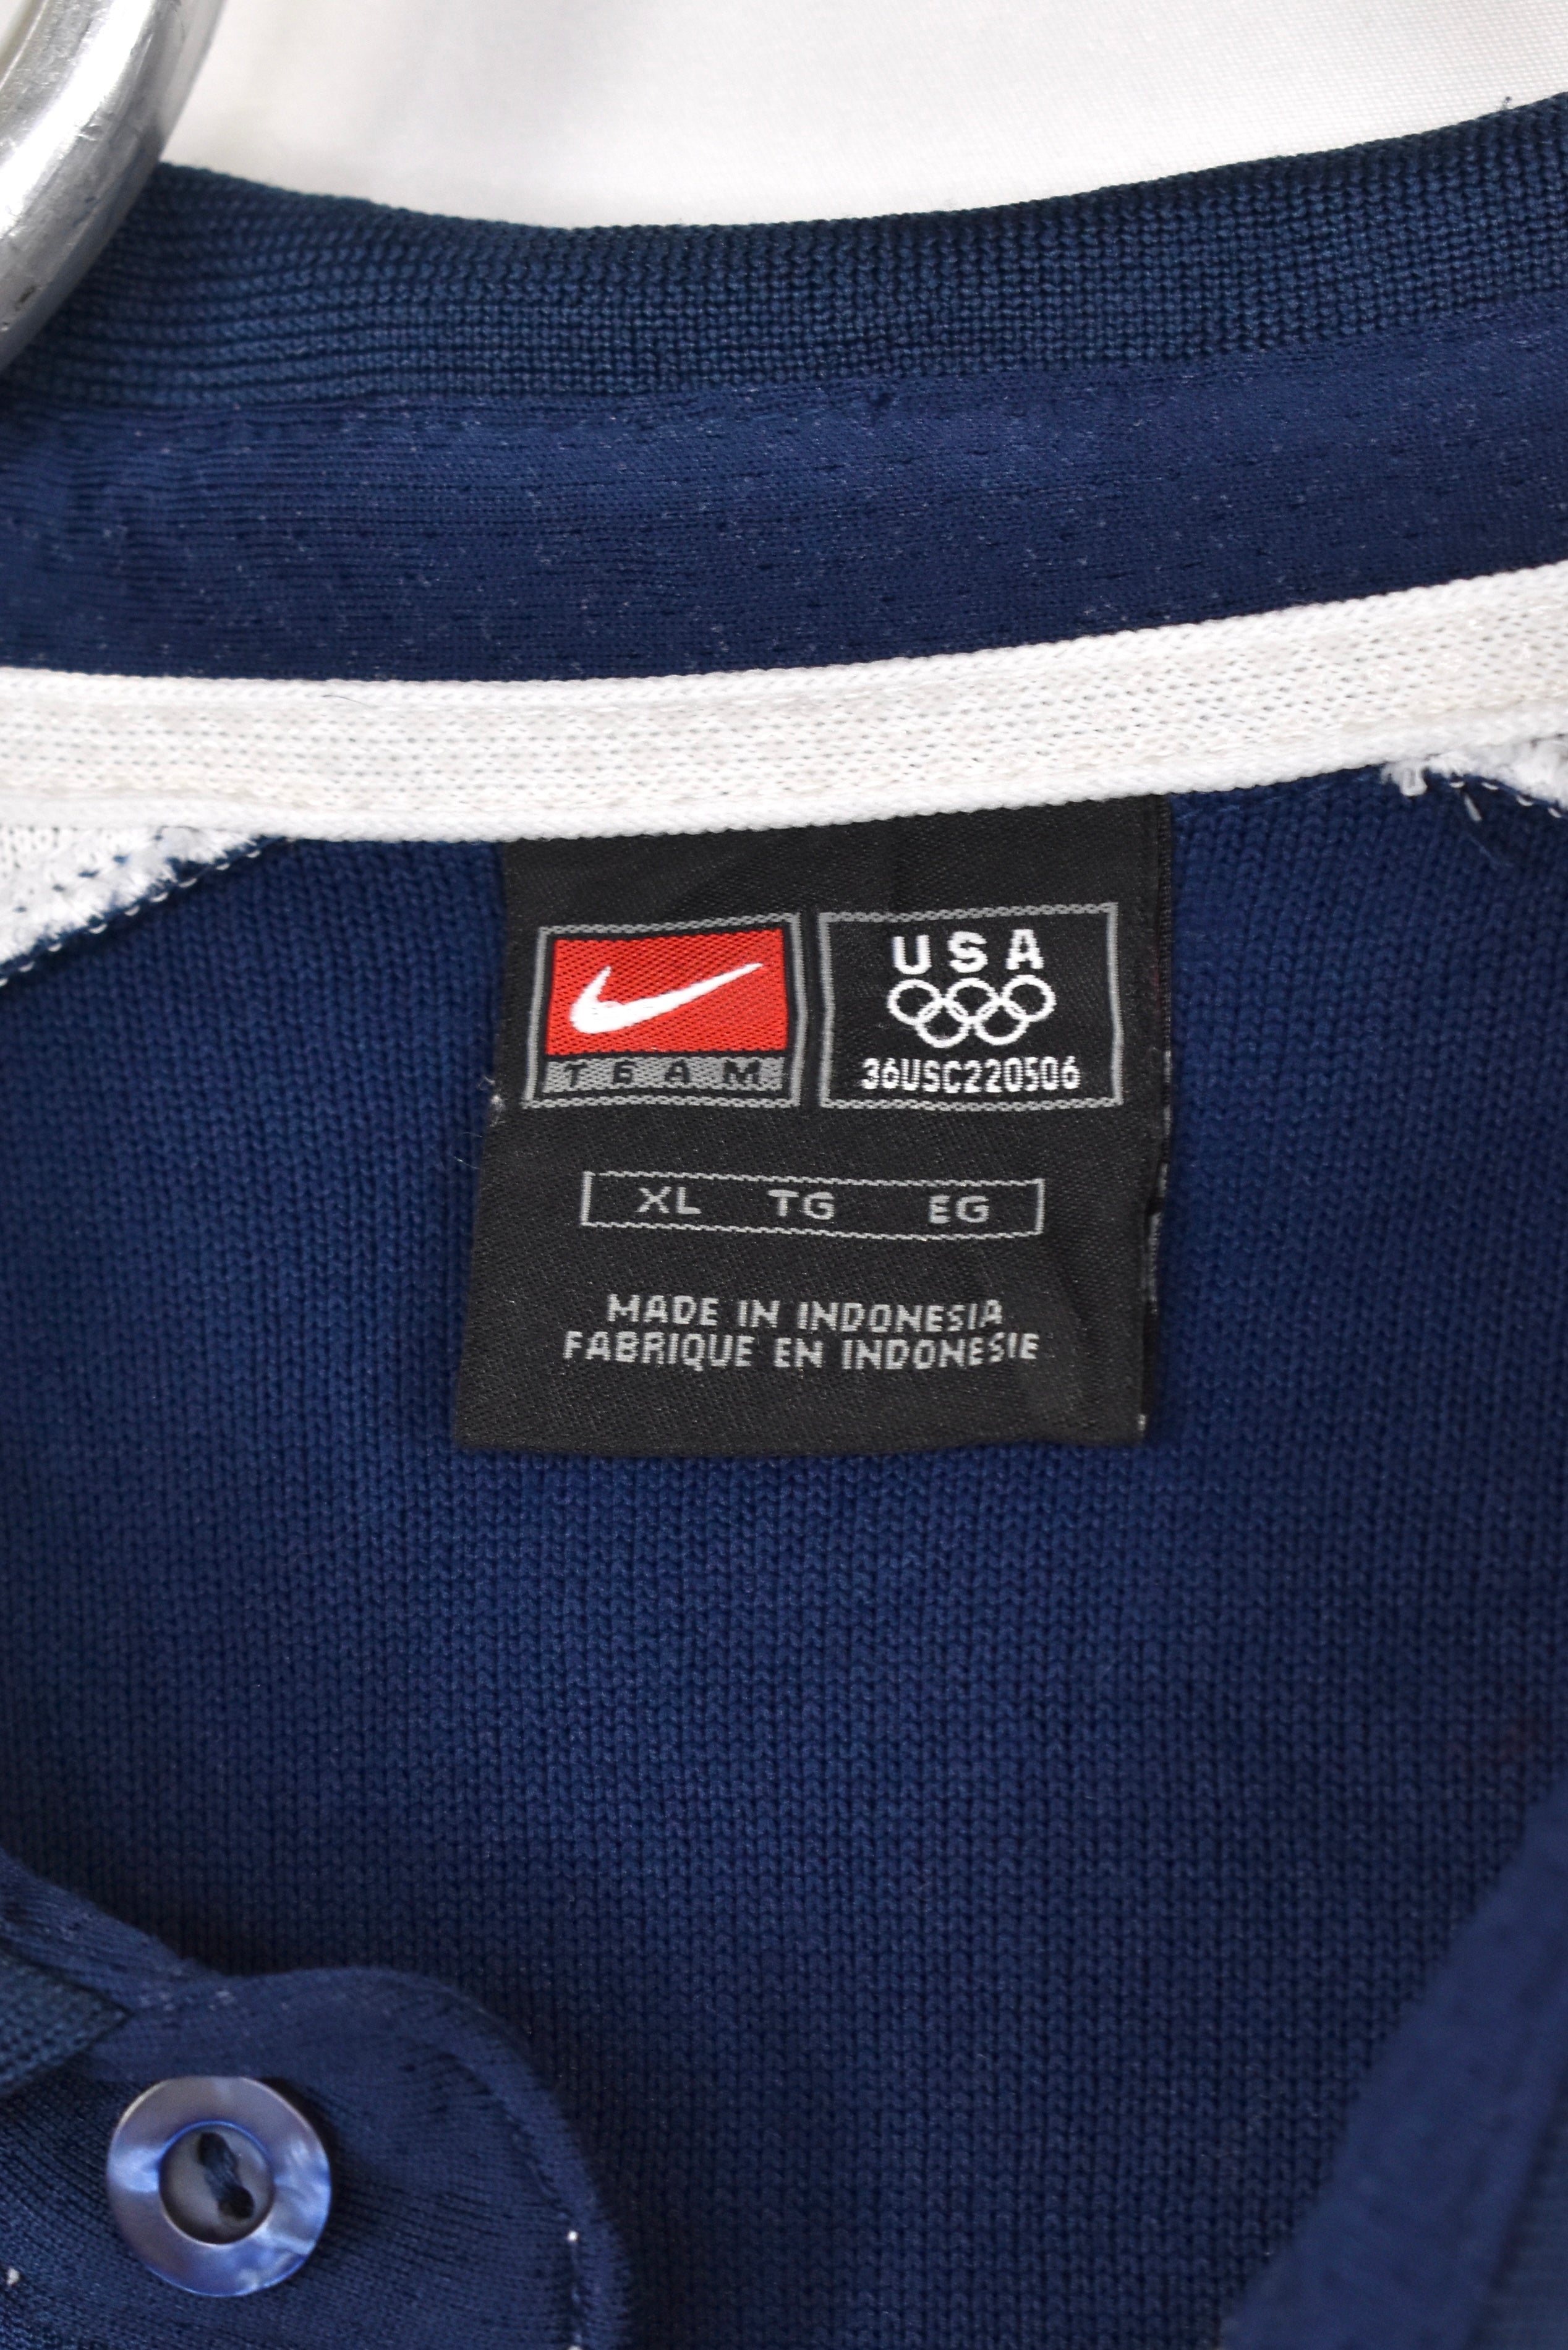 Vintage Nike sweatshirt, USA Olympic embroidered polo - AU XL